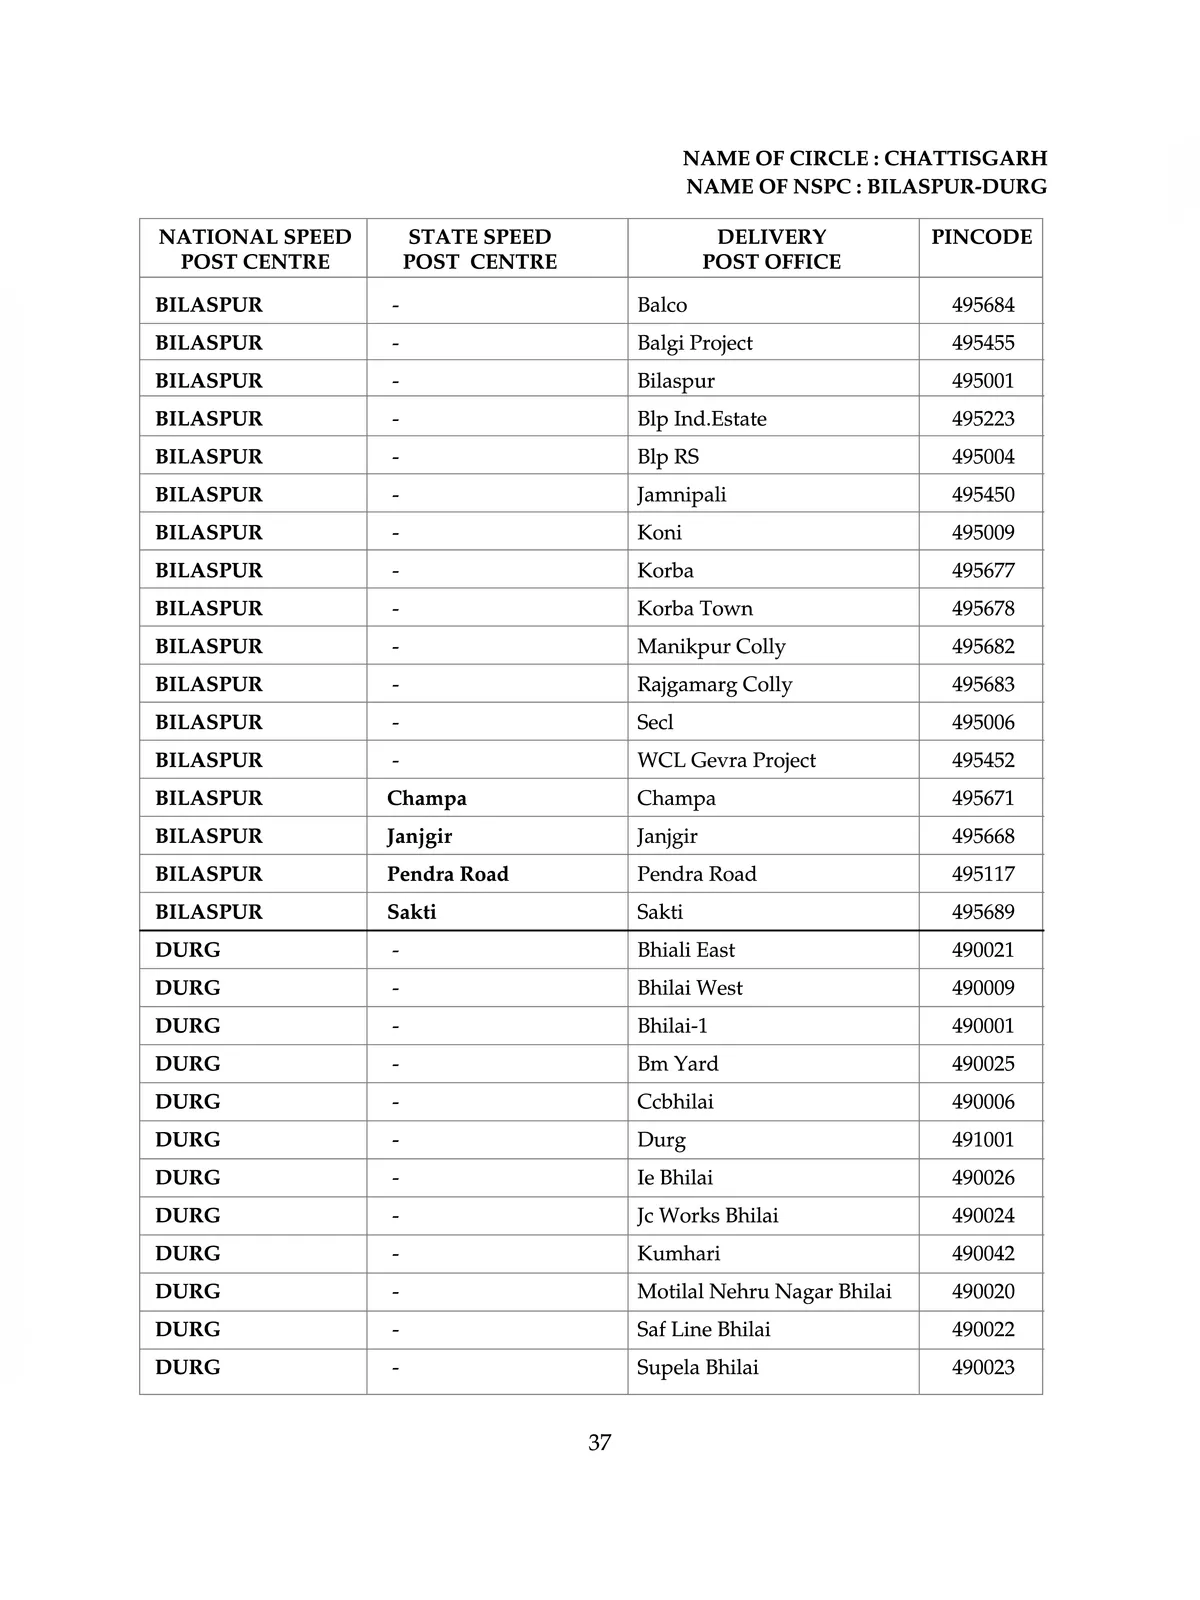 Chhattisgarh Pin Code List